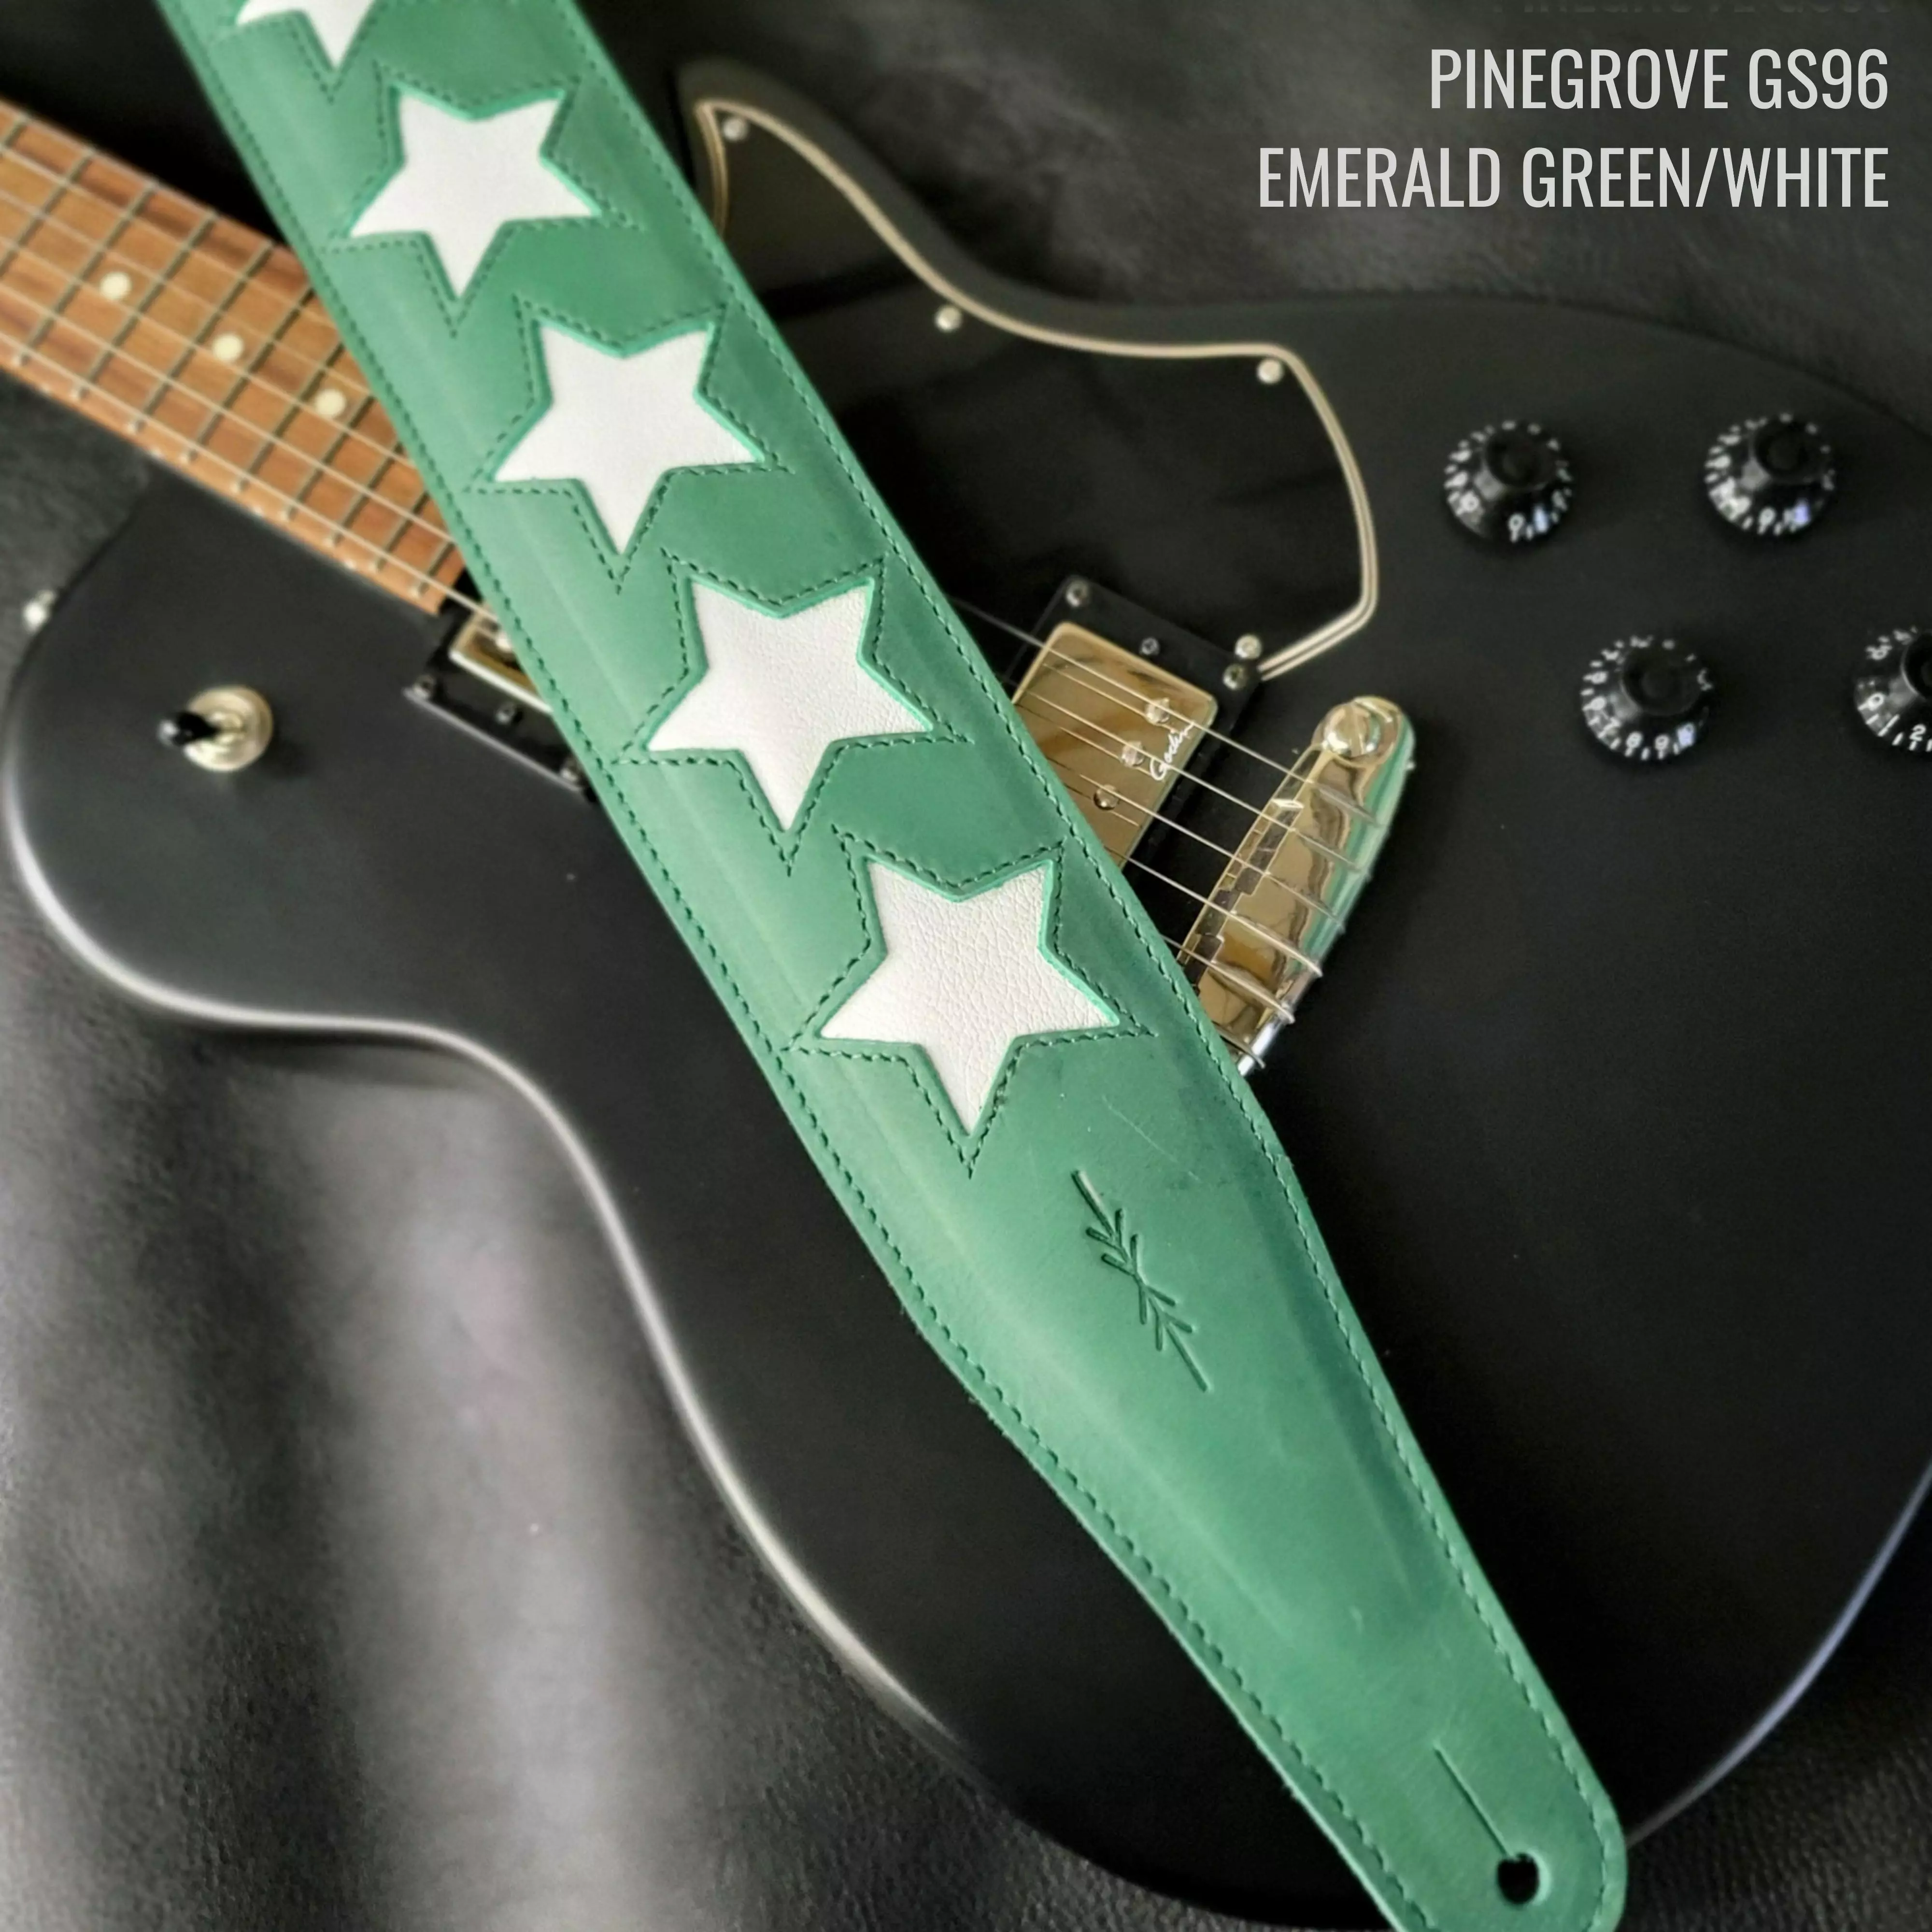 GS96 green white stars guitar strap Pinegrove ANNO 104130 rotated.jpg